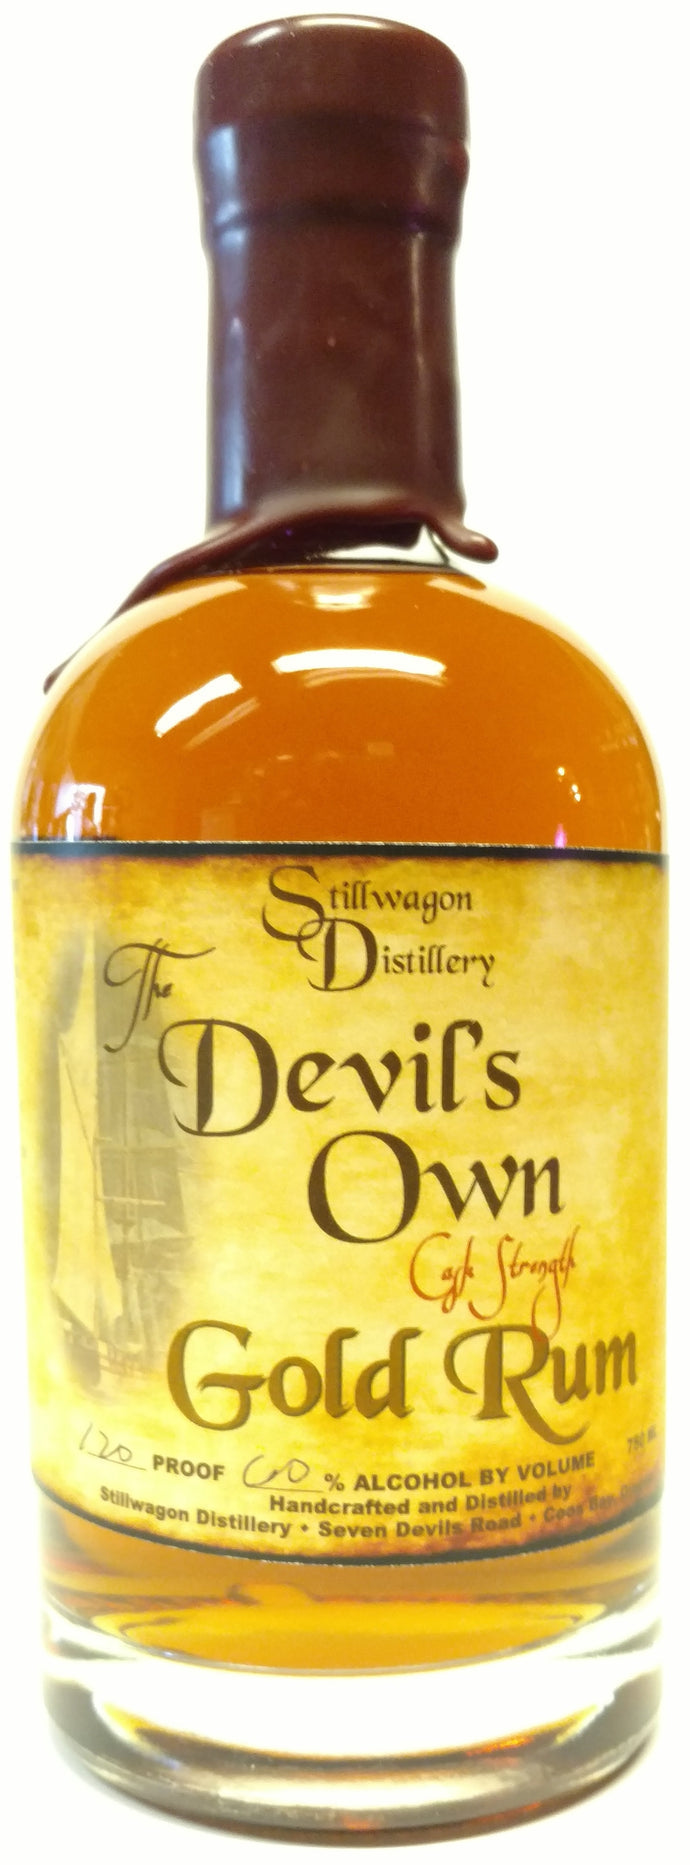 Stillwagon Distillery The Devils Own 120 Proof Batch #8 Gold Rum